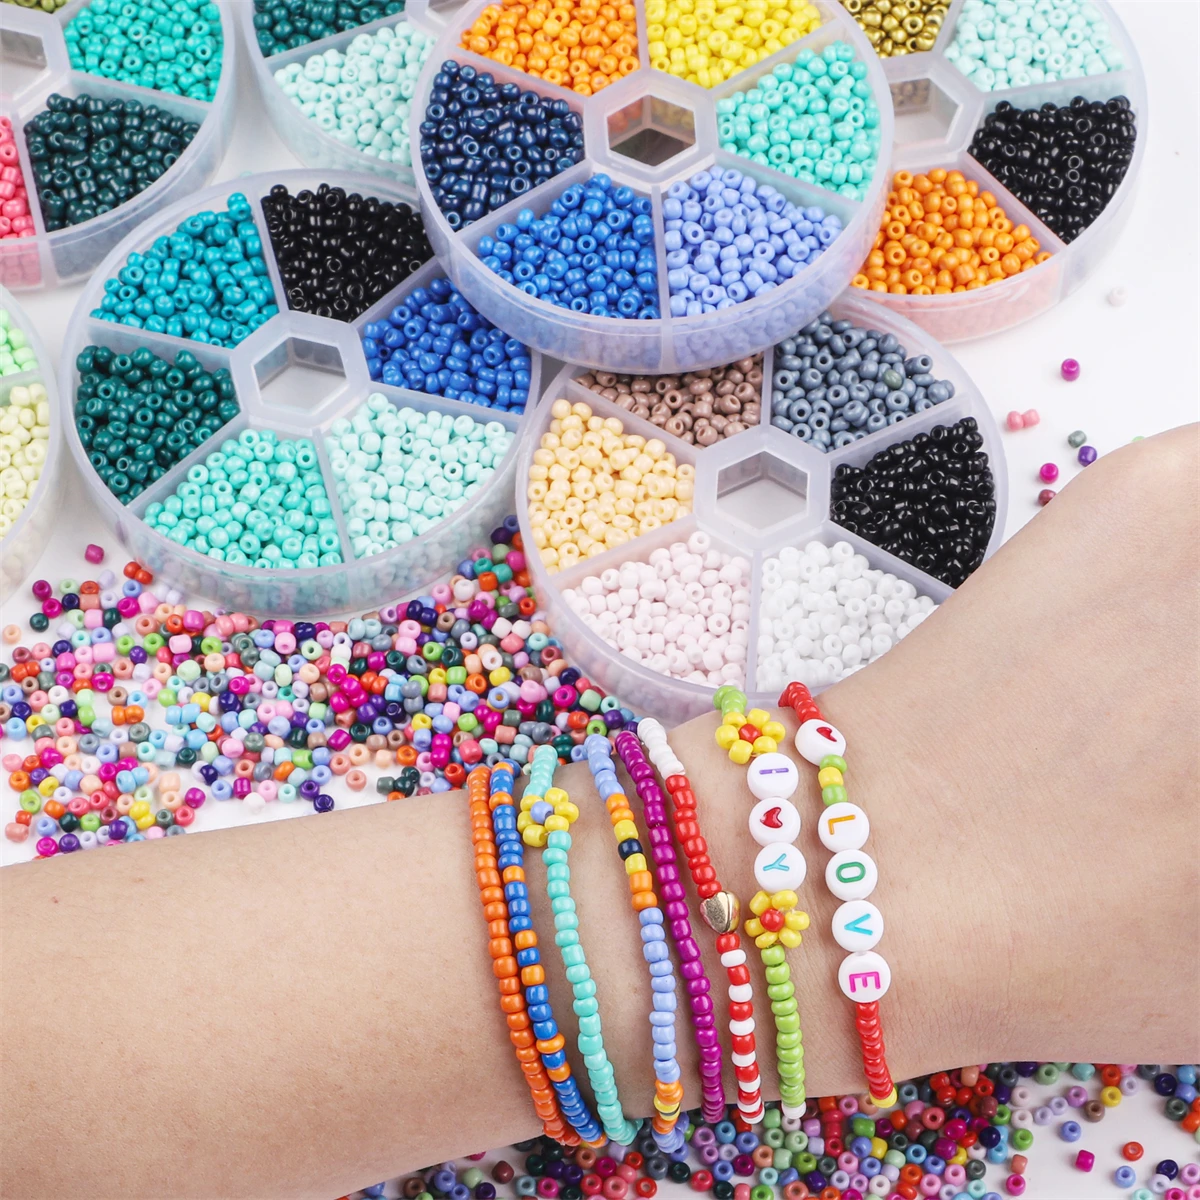 Crystal Beads for Jewelry Making Bracelet Necklace Jewelry Making Kit, DIY Kit  Glass Beads Jewelry, Girls' Birthday Gift - AliExpress